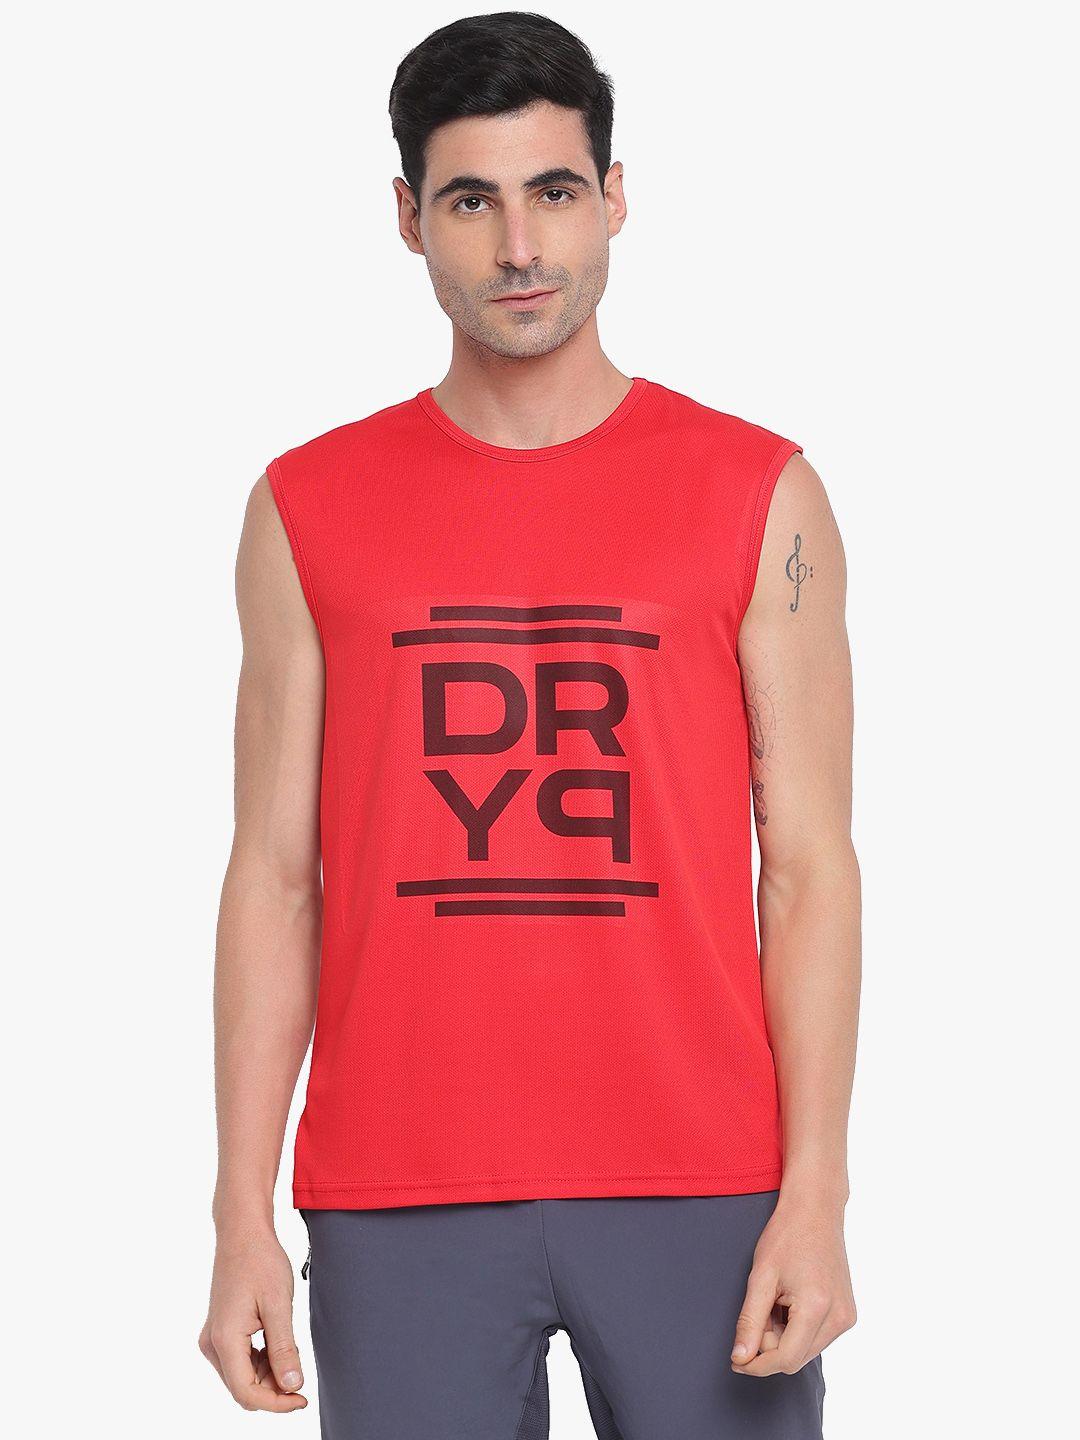 dryp evolut men red typography printed t-shirt